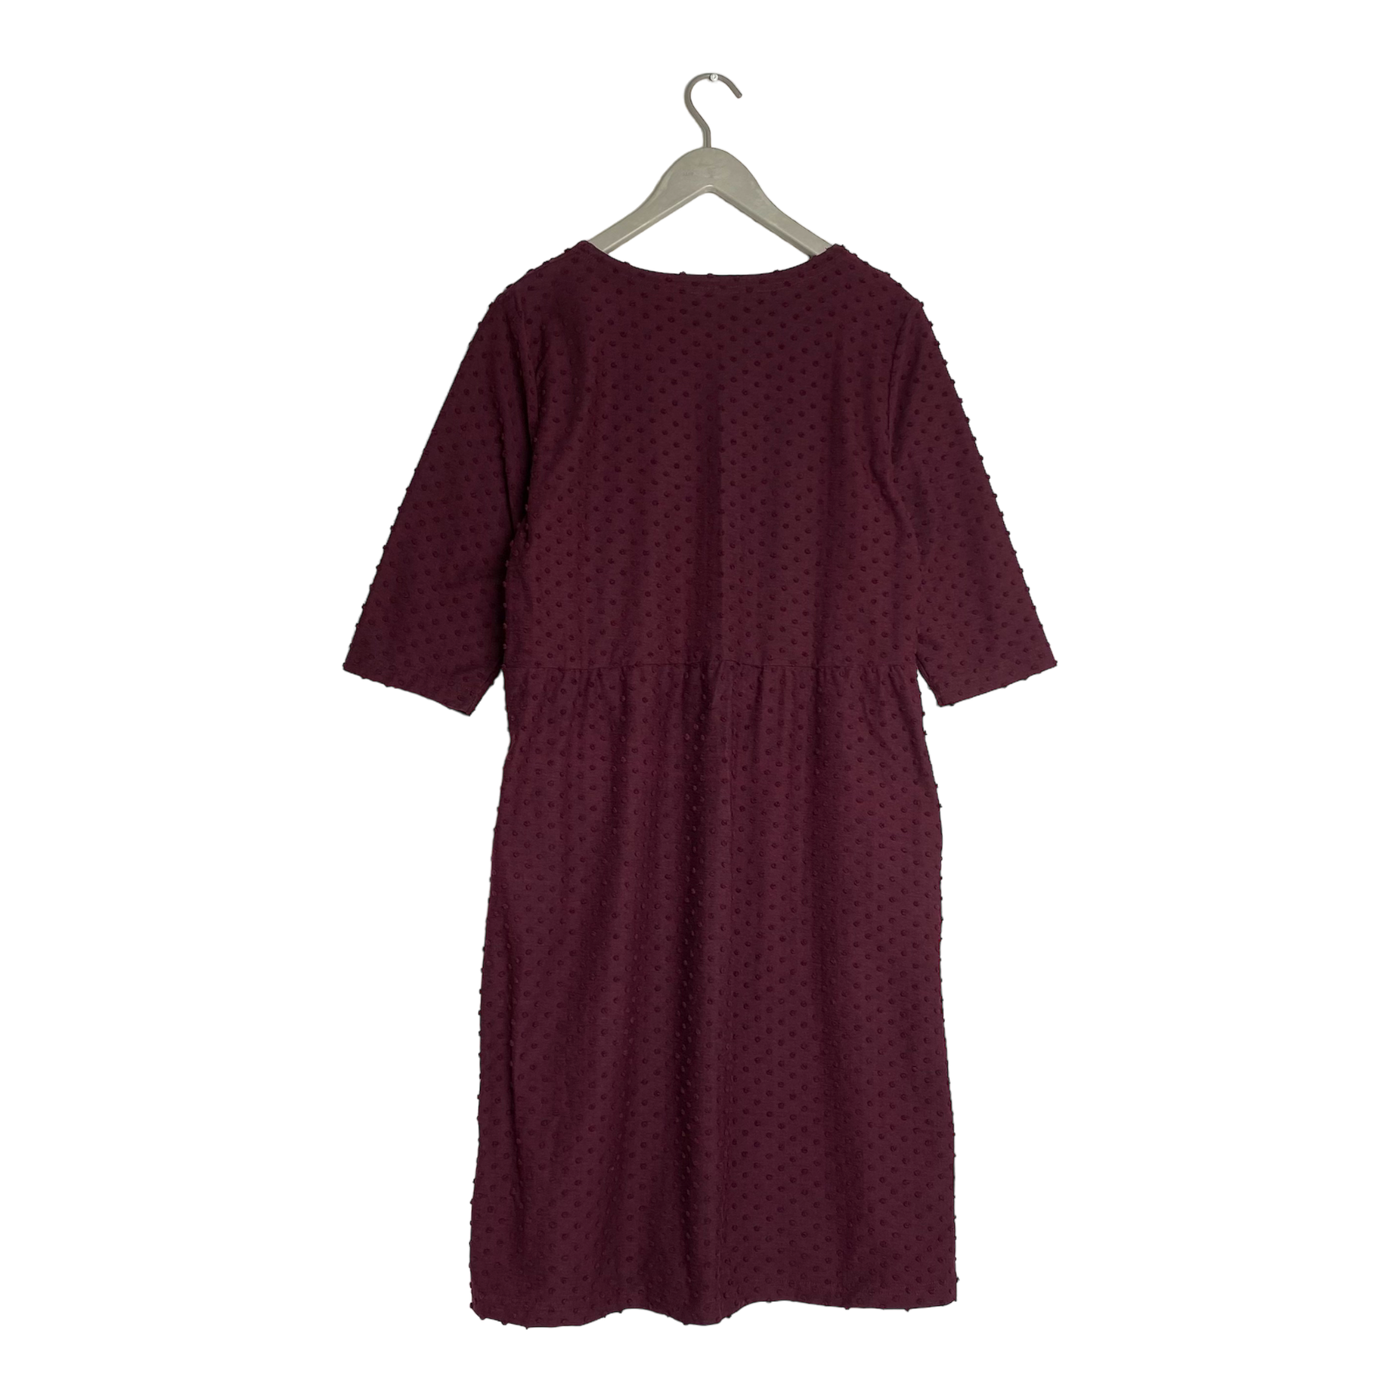 Aarre marisa dress, burgundy dot | woman XL